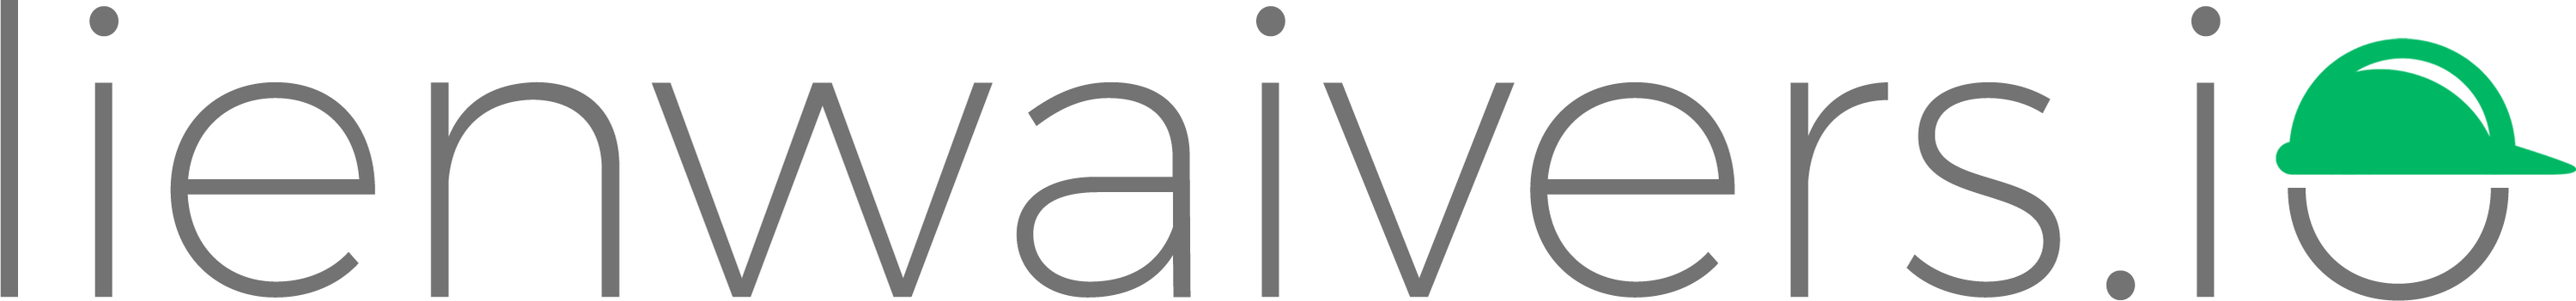 lienwaivers.io Logo